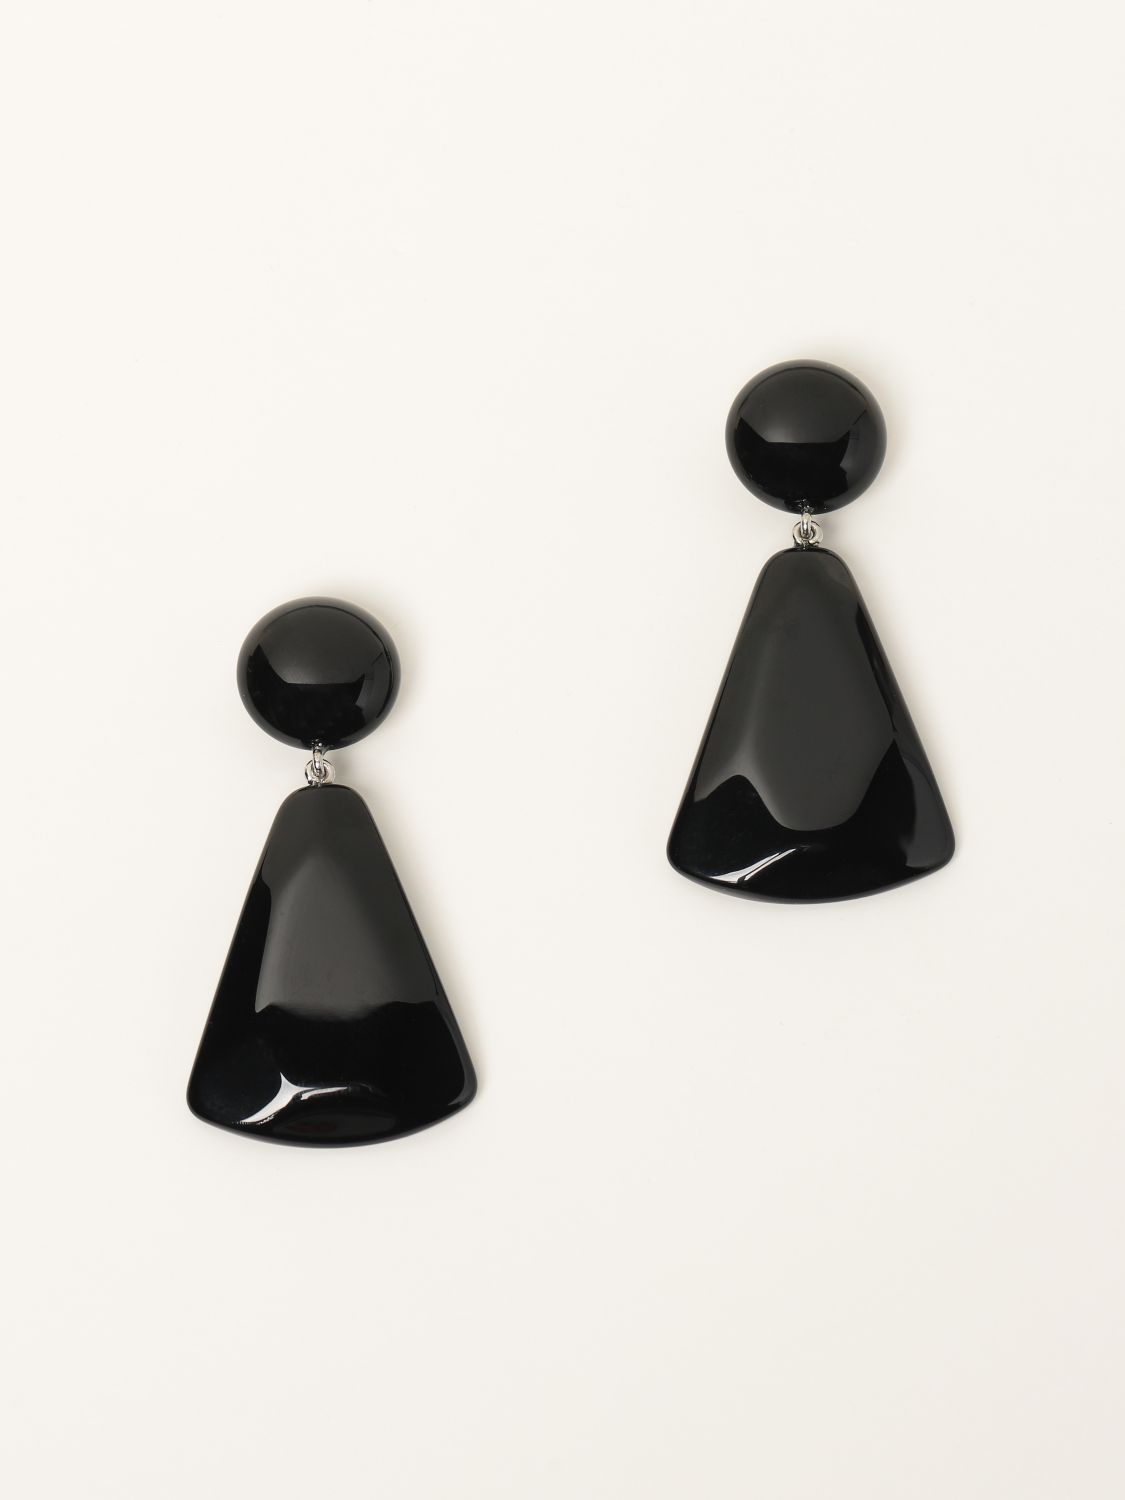 Simplicity illegal Constitute EMPORIO ARMANI: resin earrings - Black | Emporio Armani jewel 860409 1A608  online on GIGLIO.COM